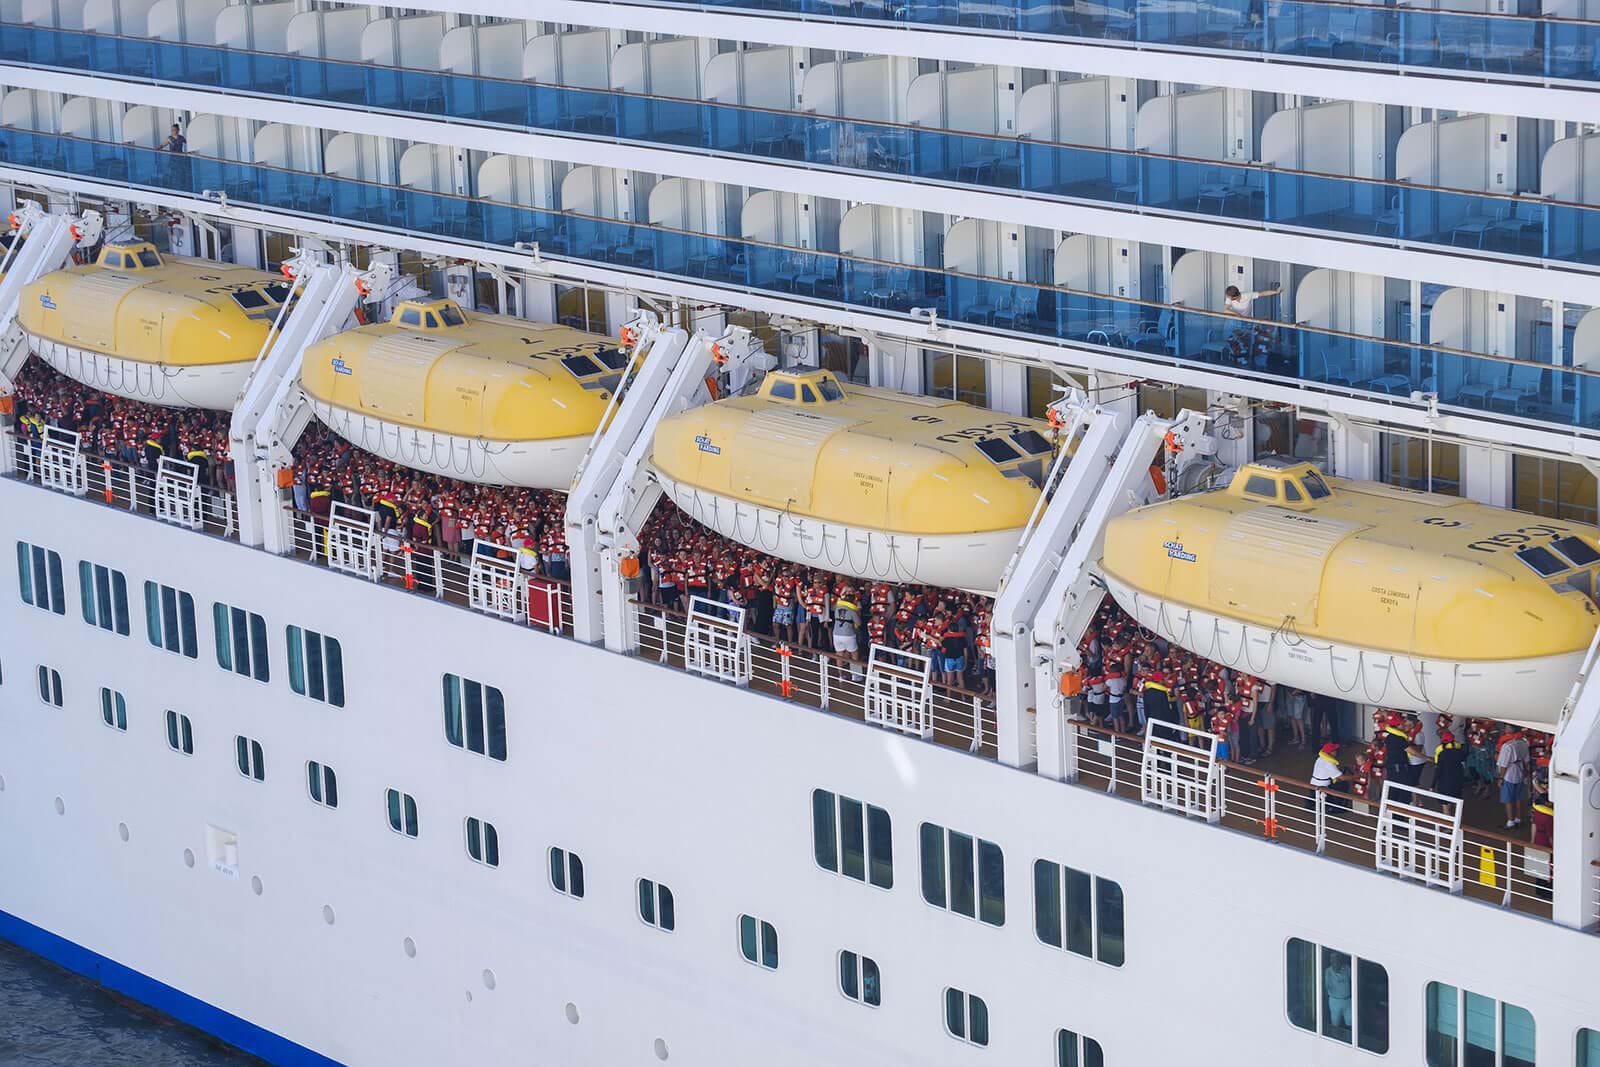 Passengers gathered around cruise ship lifeboats